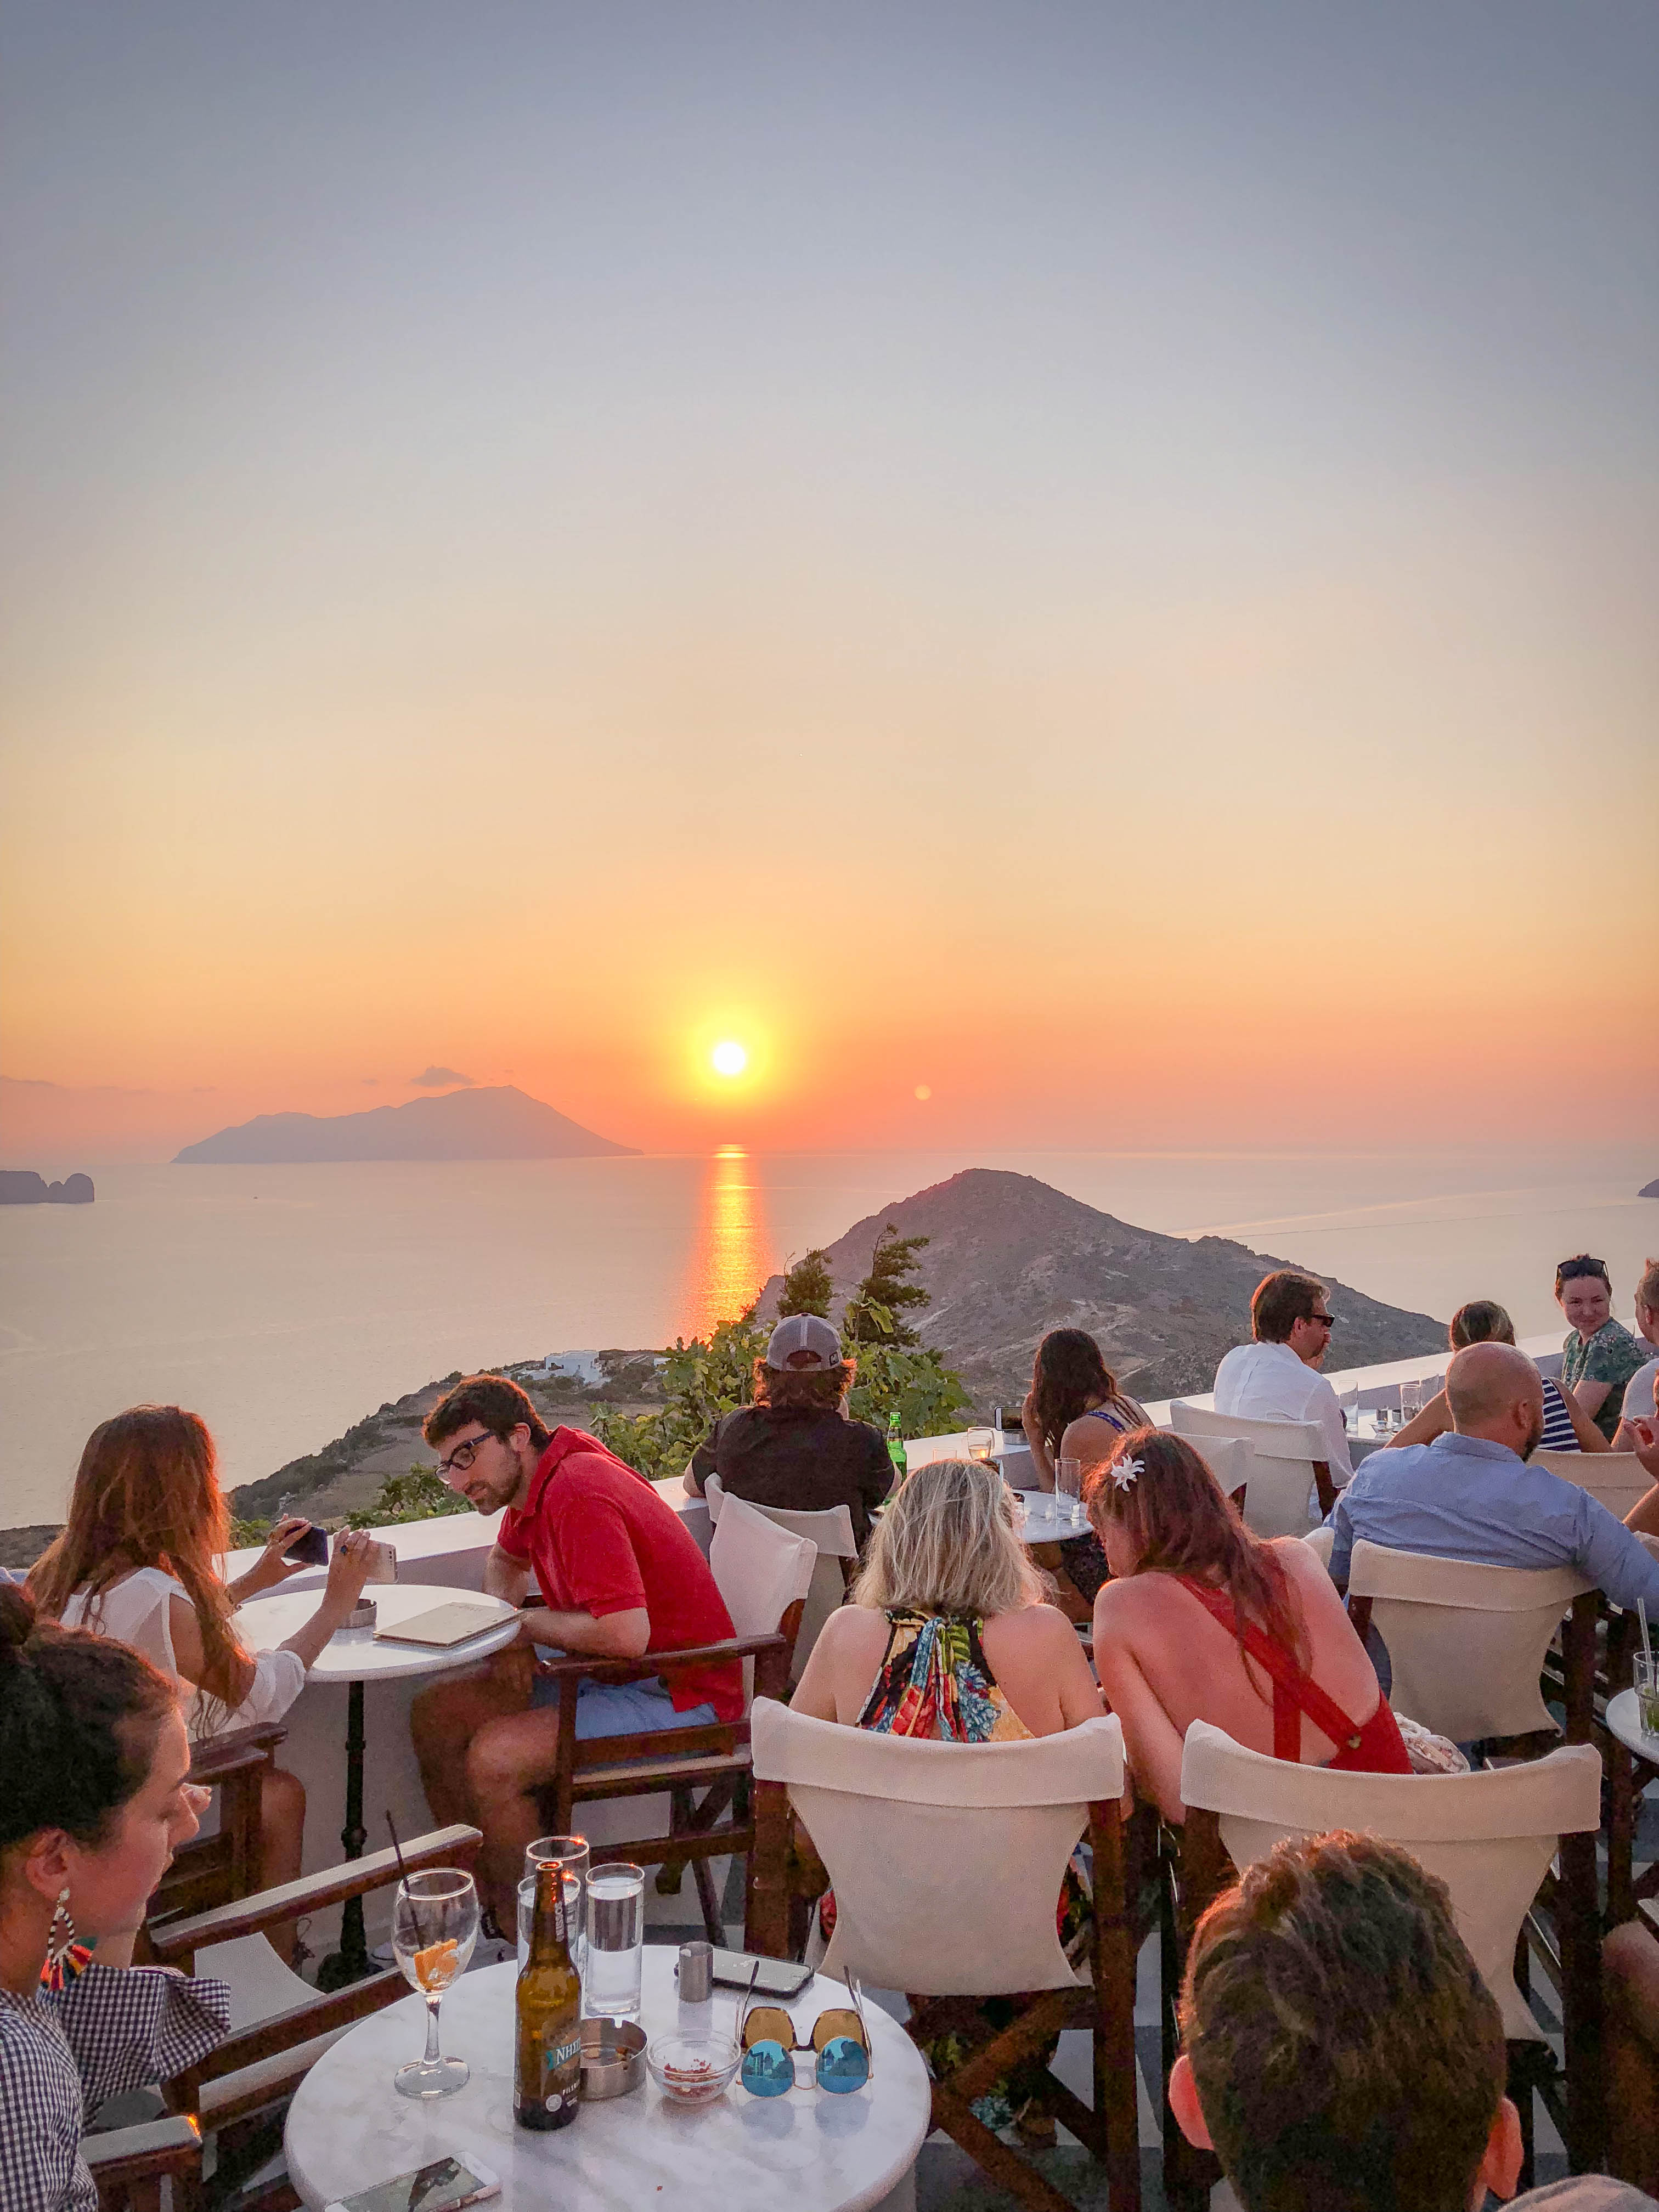 Utopia Café | Milos, Greece | Photo by Compass + Twine